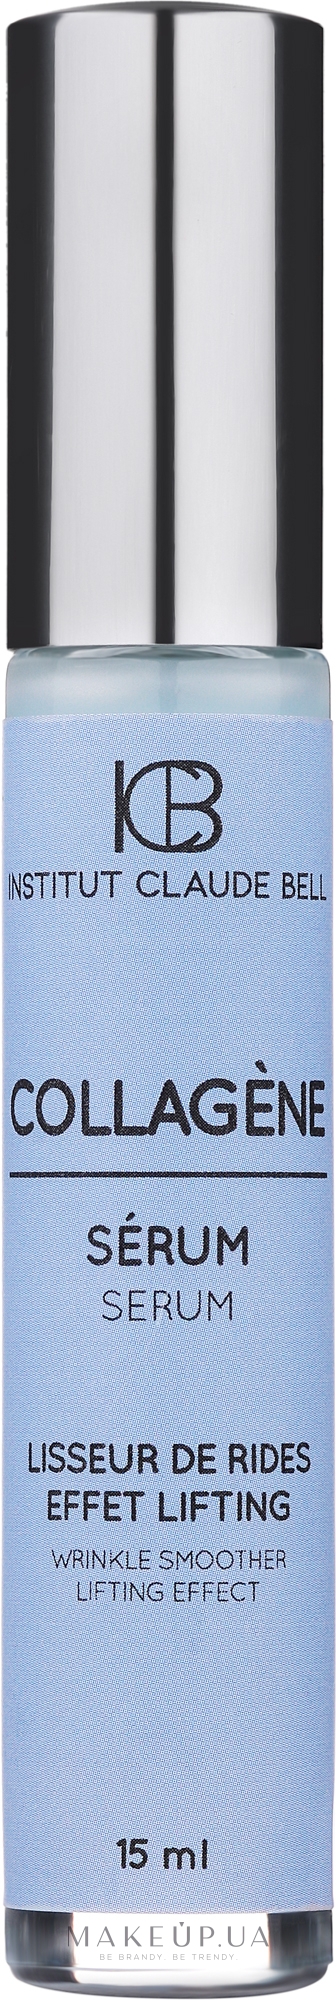 Сыворотка для лица с коллагеном - Institut Claude Bell Collagen Serum — фото 15ml